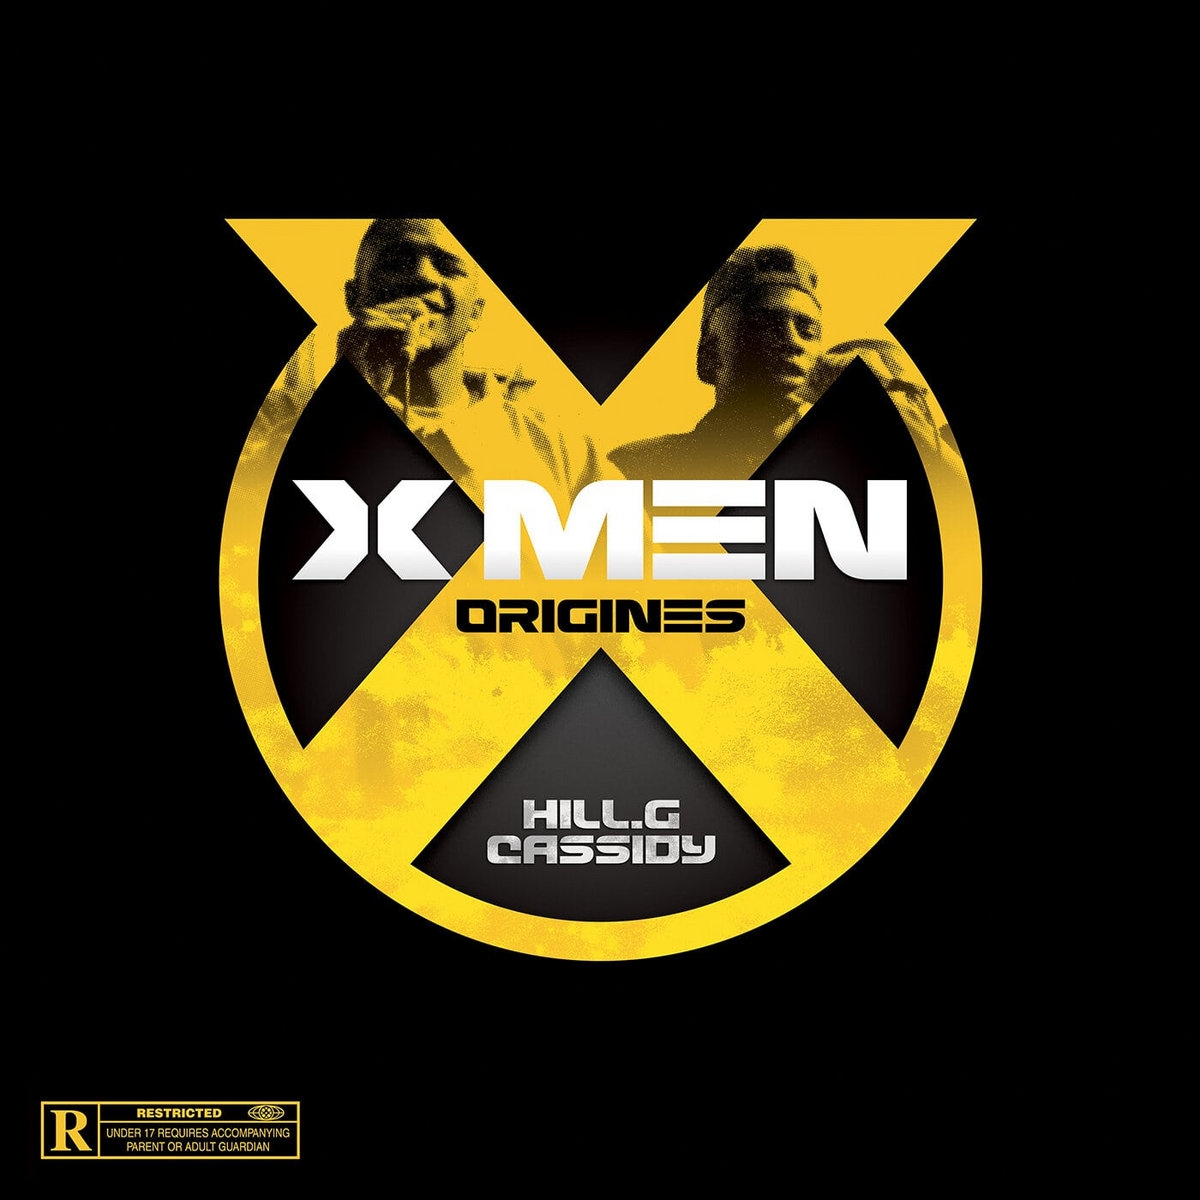 Album vinyle X-Men - Origines de x-men sur Scredboutique.com